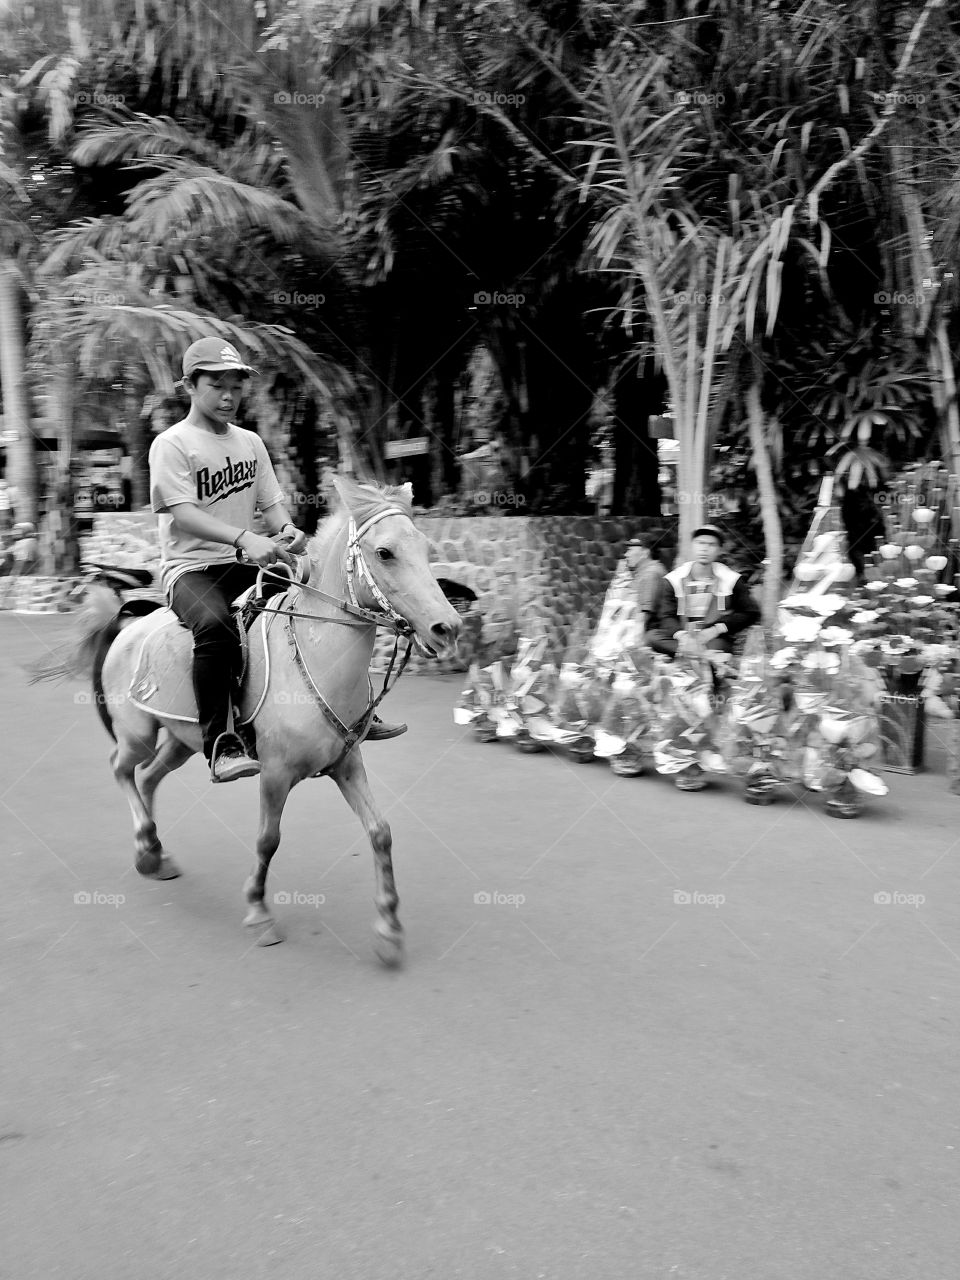 Horse rider on the street